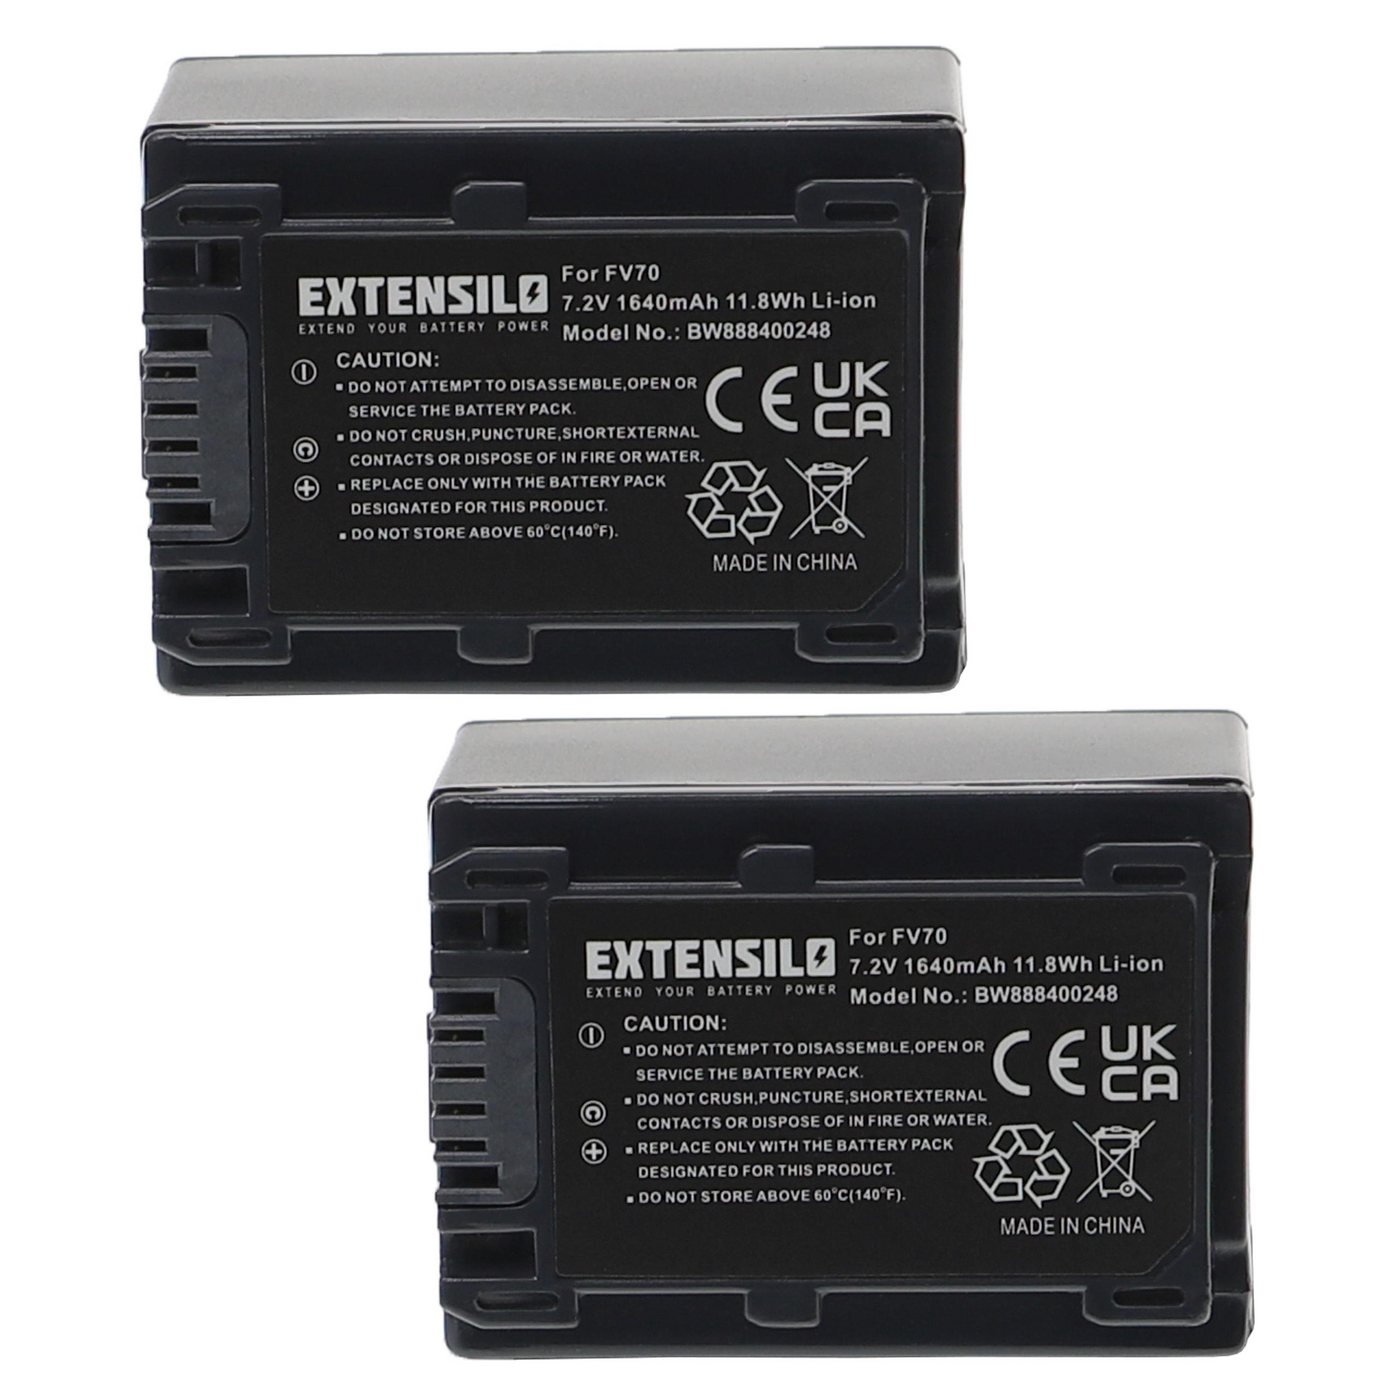 Extensilo passend für Sony DCR-SX44/E, DCR-SX44/L, DCR-SX44/R, DCR-SX45B, DCR-SX44E, DCR-SX45, DCR-SX45E Kamera / Foto DSLR / Camcorder Analog / Camcorder Digital (1640mAh, 7,2V, Li-Ion) Kamera-Akku 1640 mAh von Extensilo